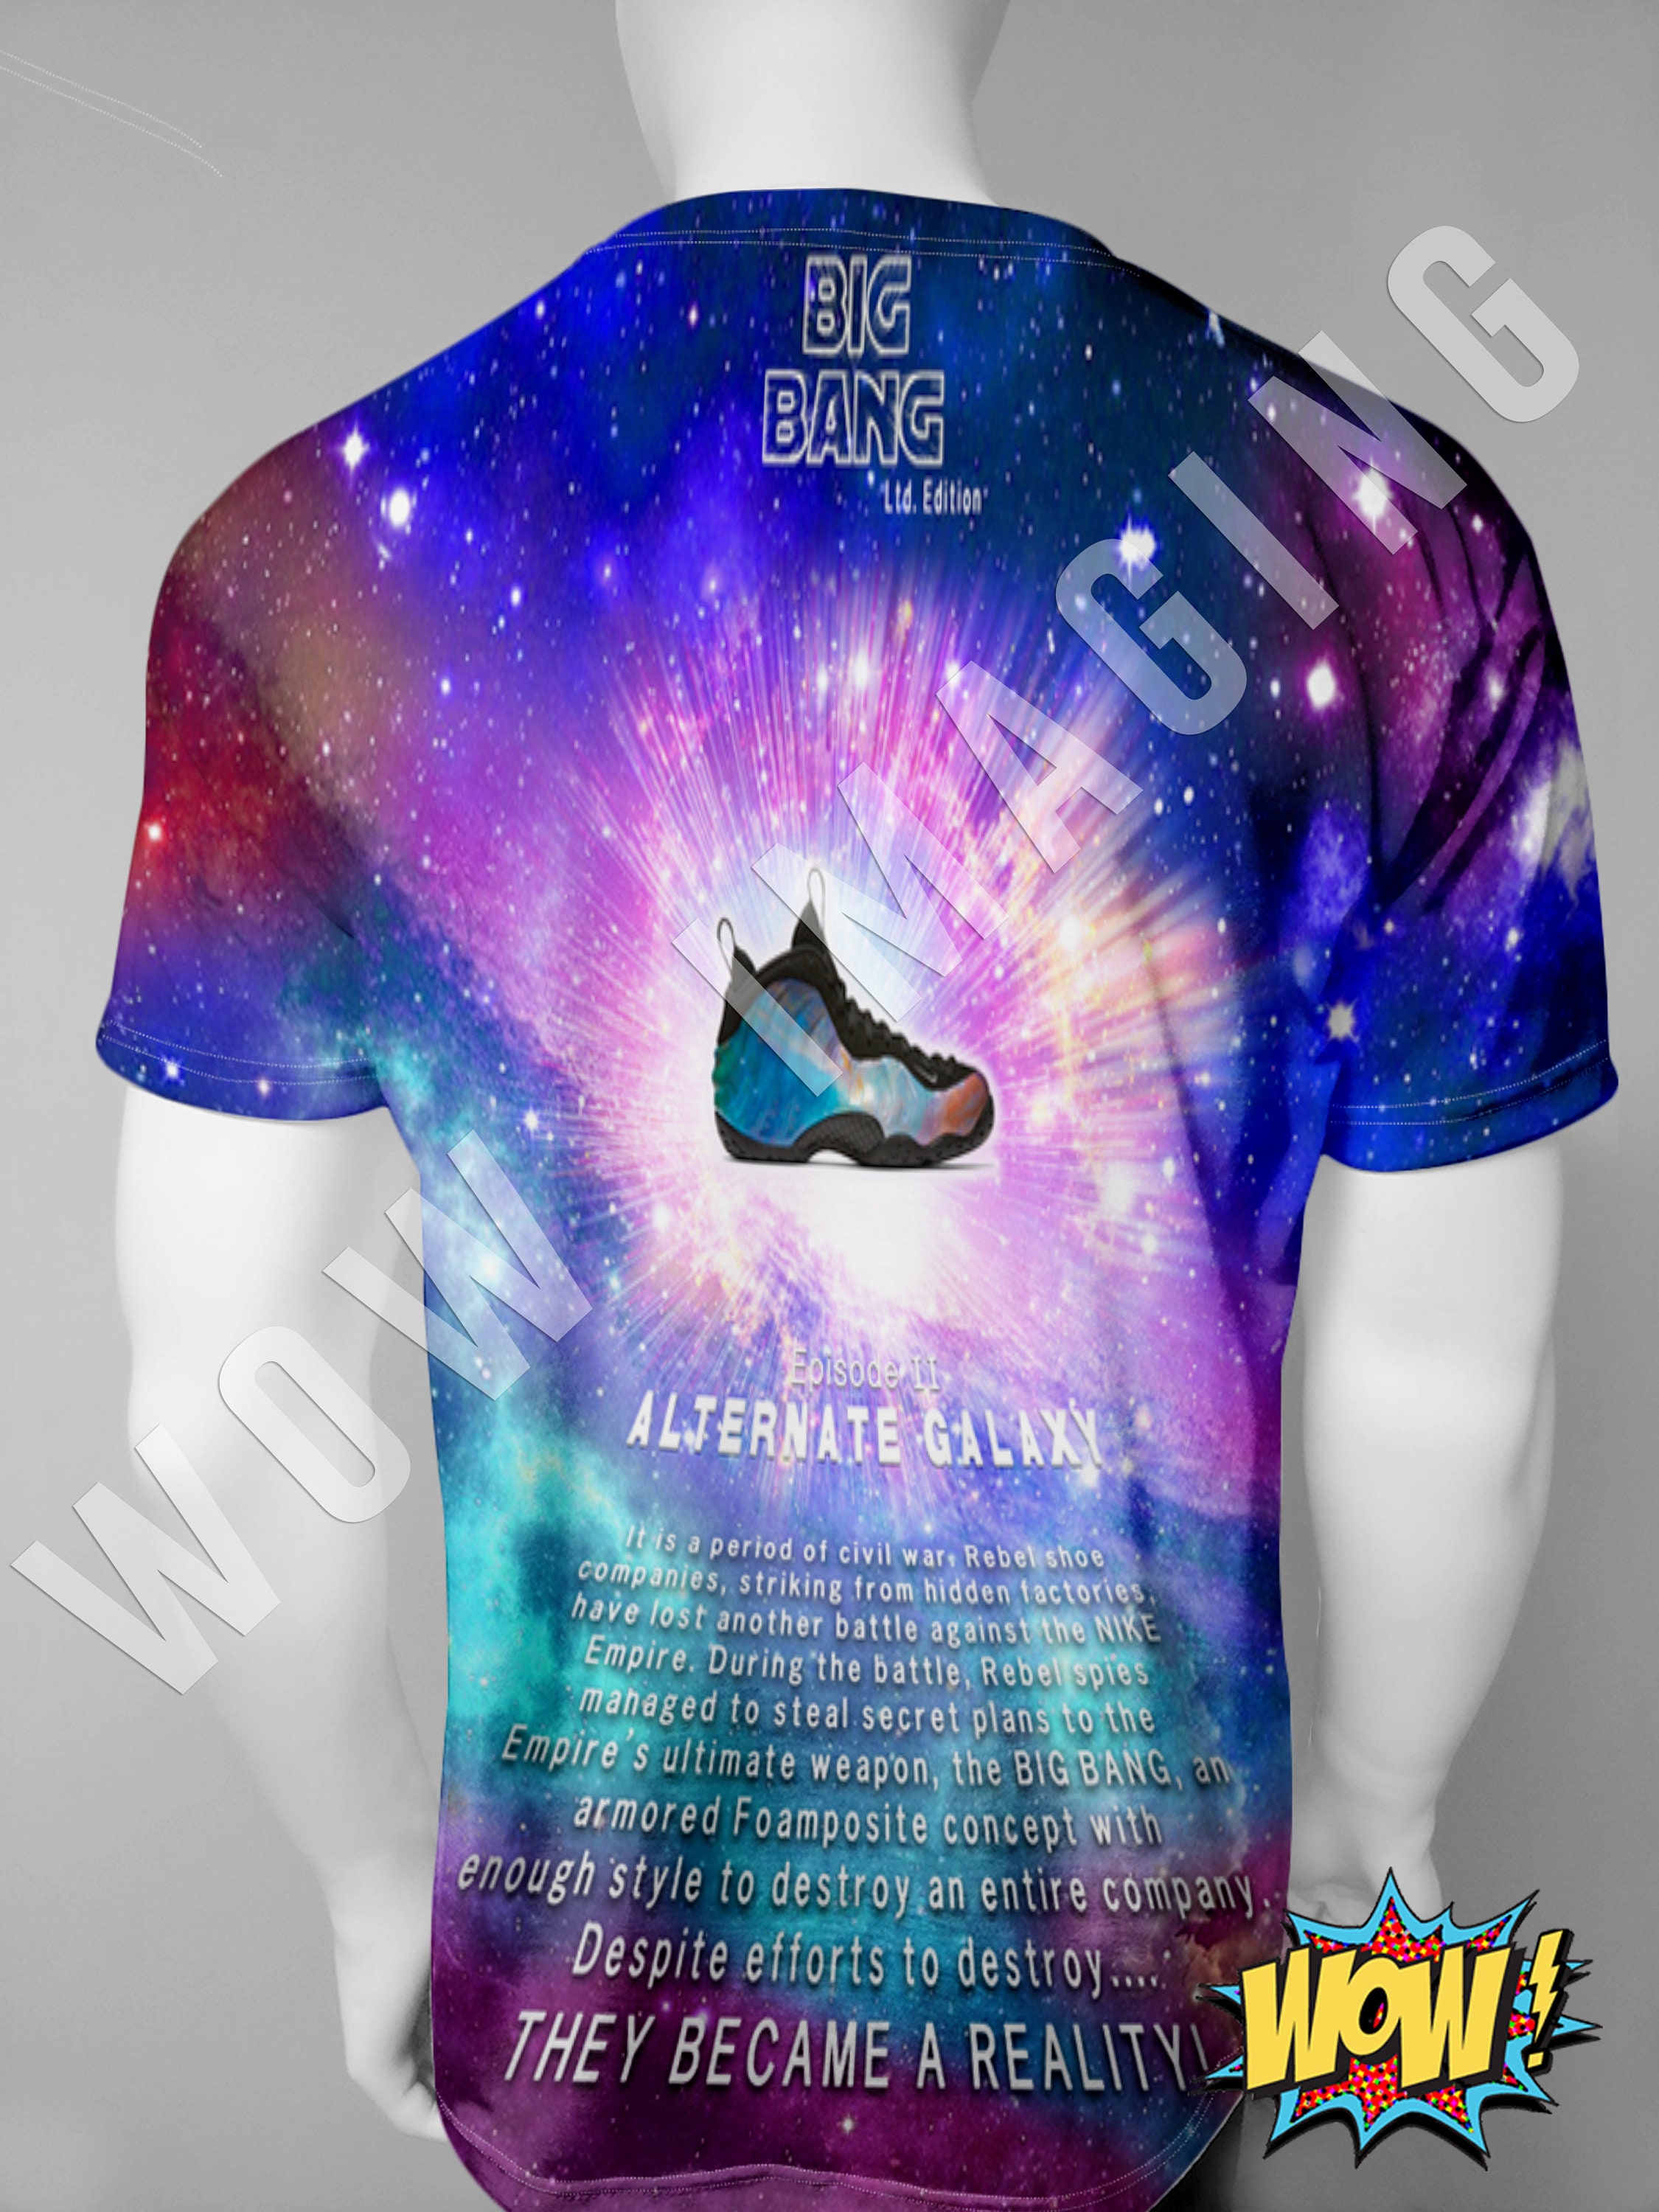 Foamposite Big BANG Star T-shirt Alternate Galaxy - Etsy